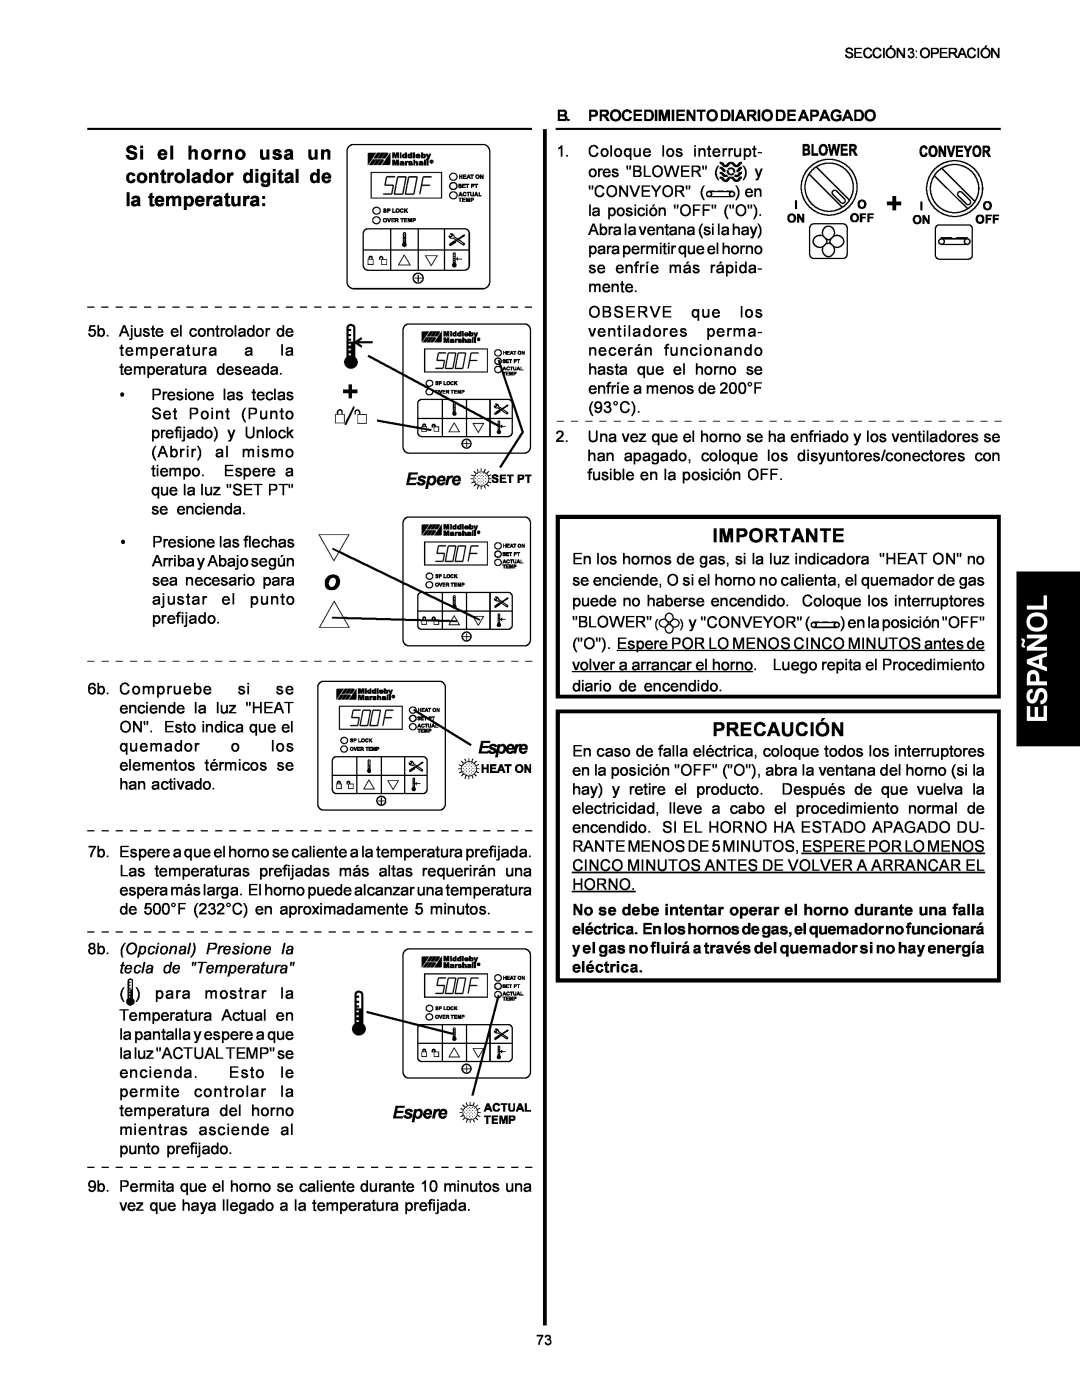 Middleby Marshall Model PS536 installation manual Español, Espere, B. Procedimientodiariodeapagado 